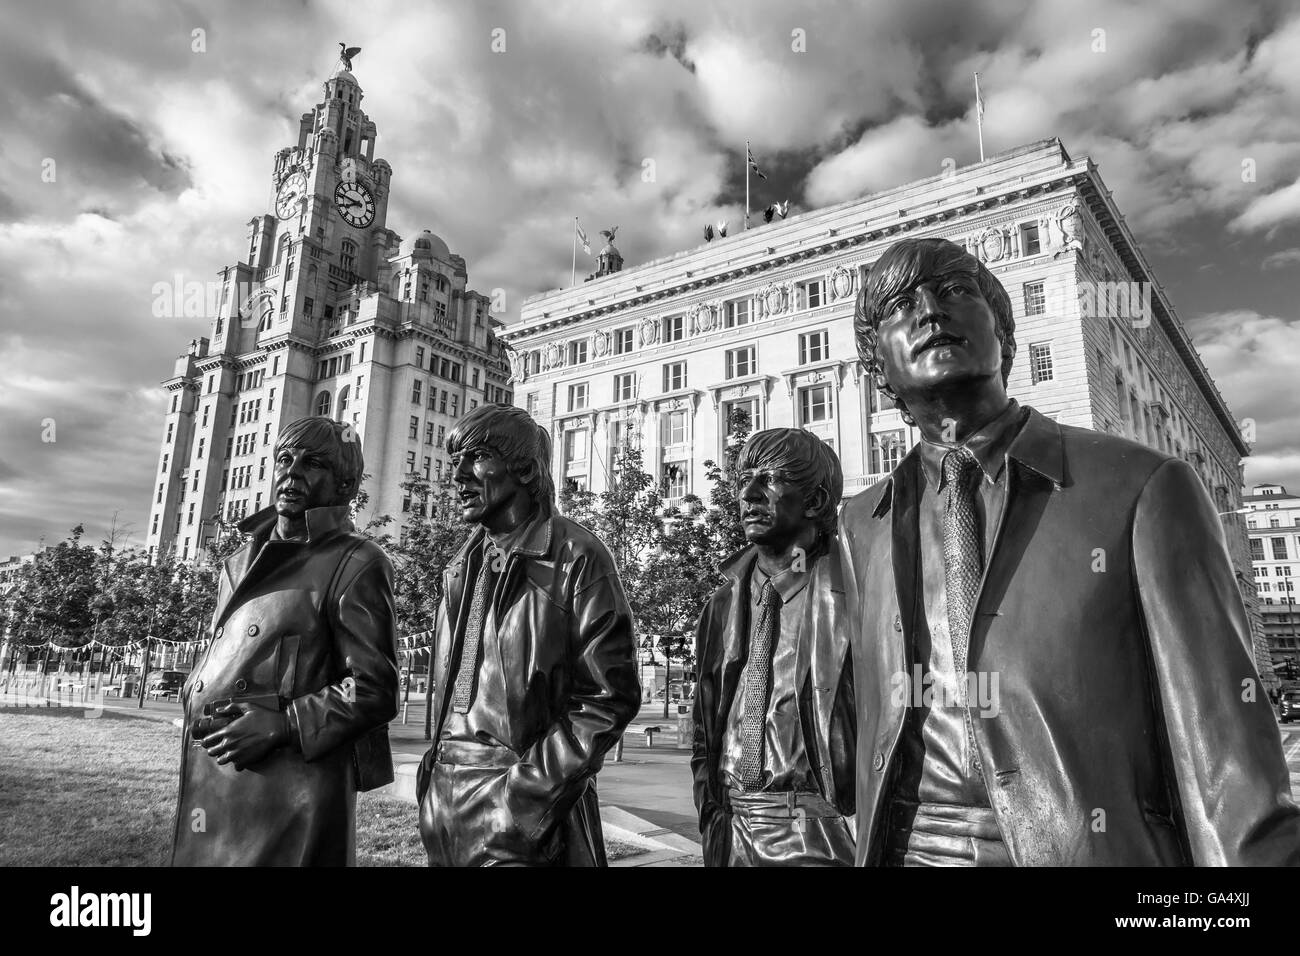 The Beatles Statue Pier Head Liverpool UK monochrome Stock Photo